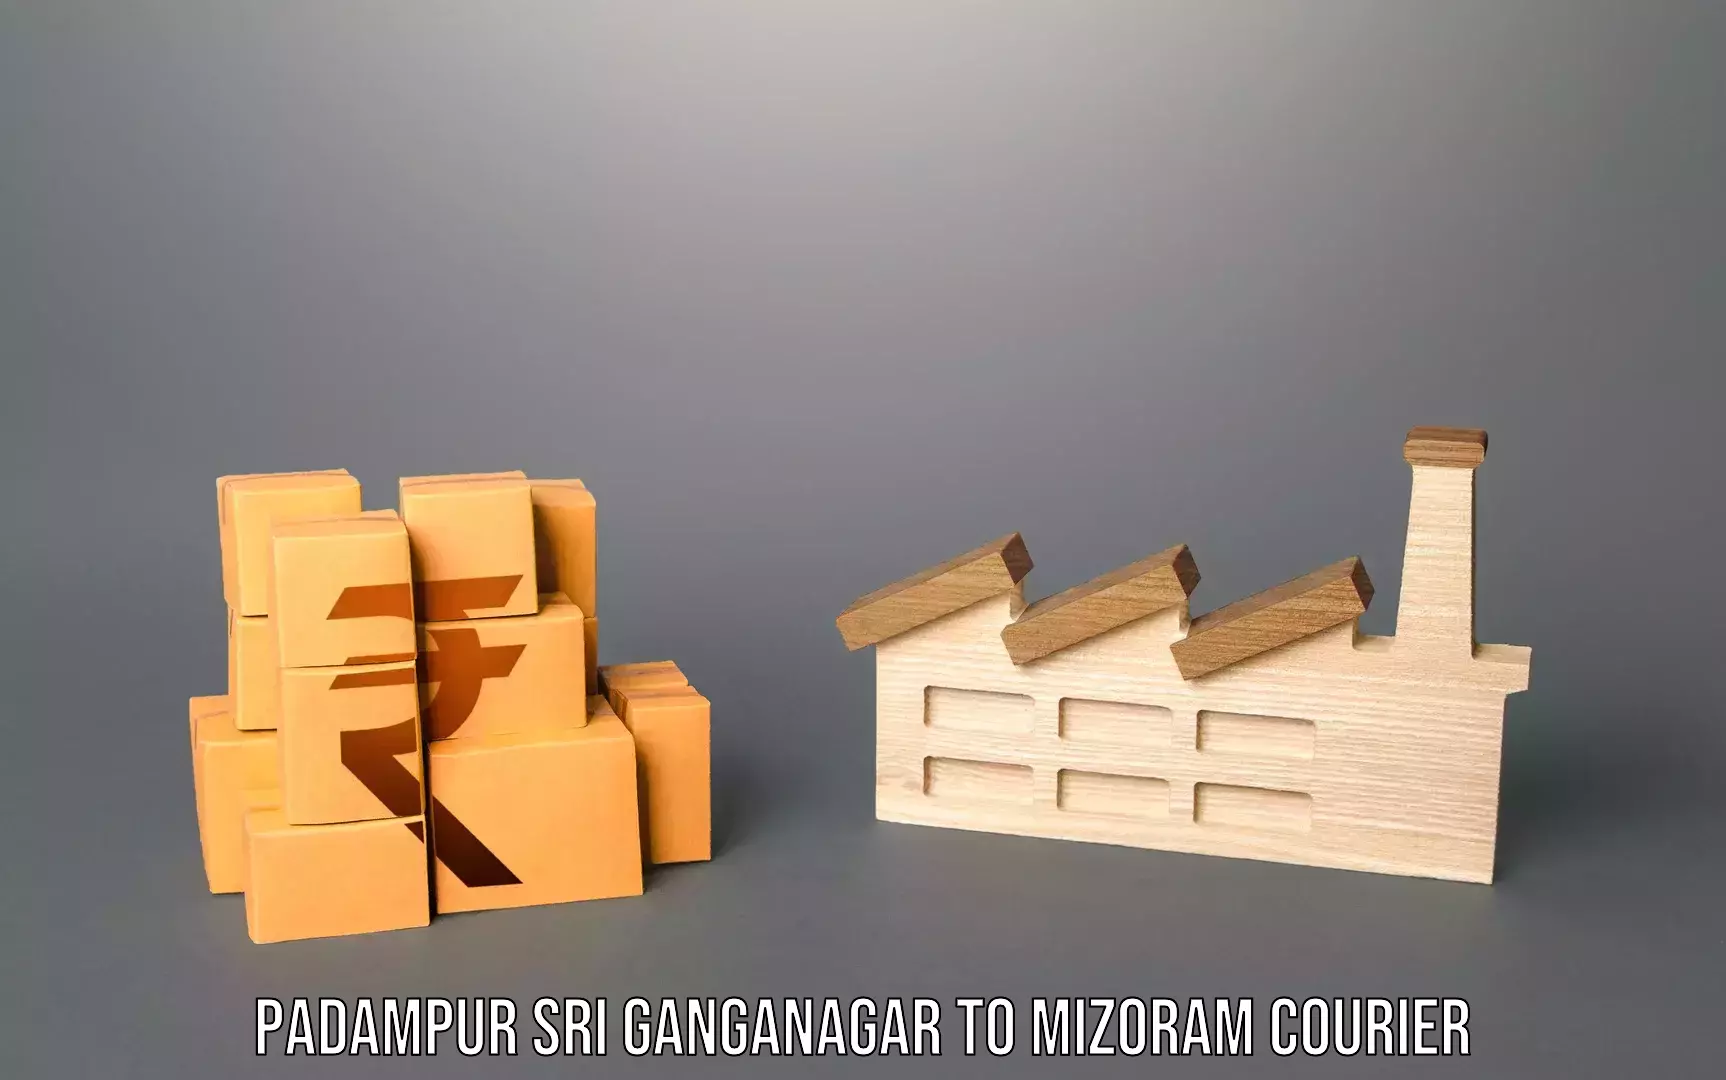 Luggage delivery app Padampur Sri Ganganagar to Mizoram